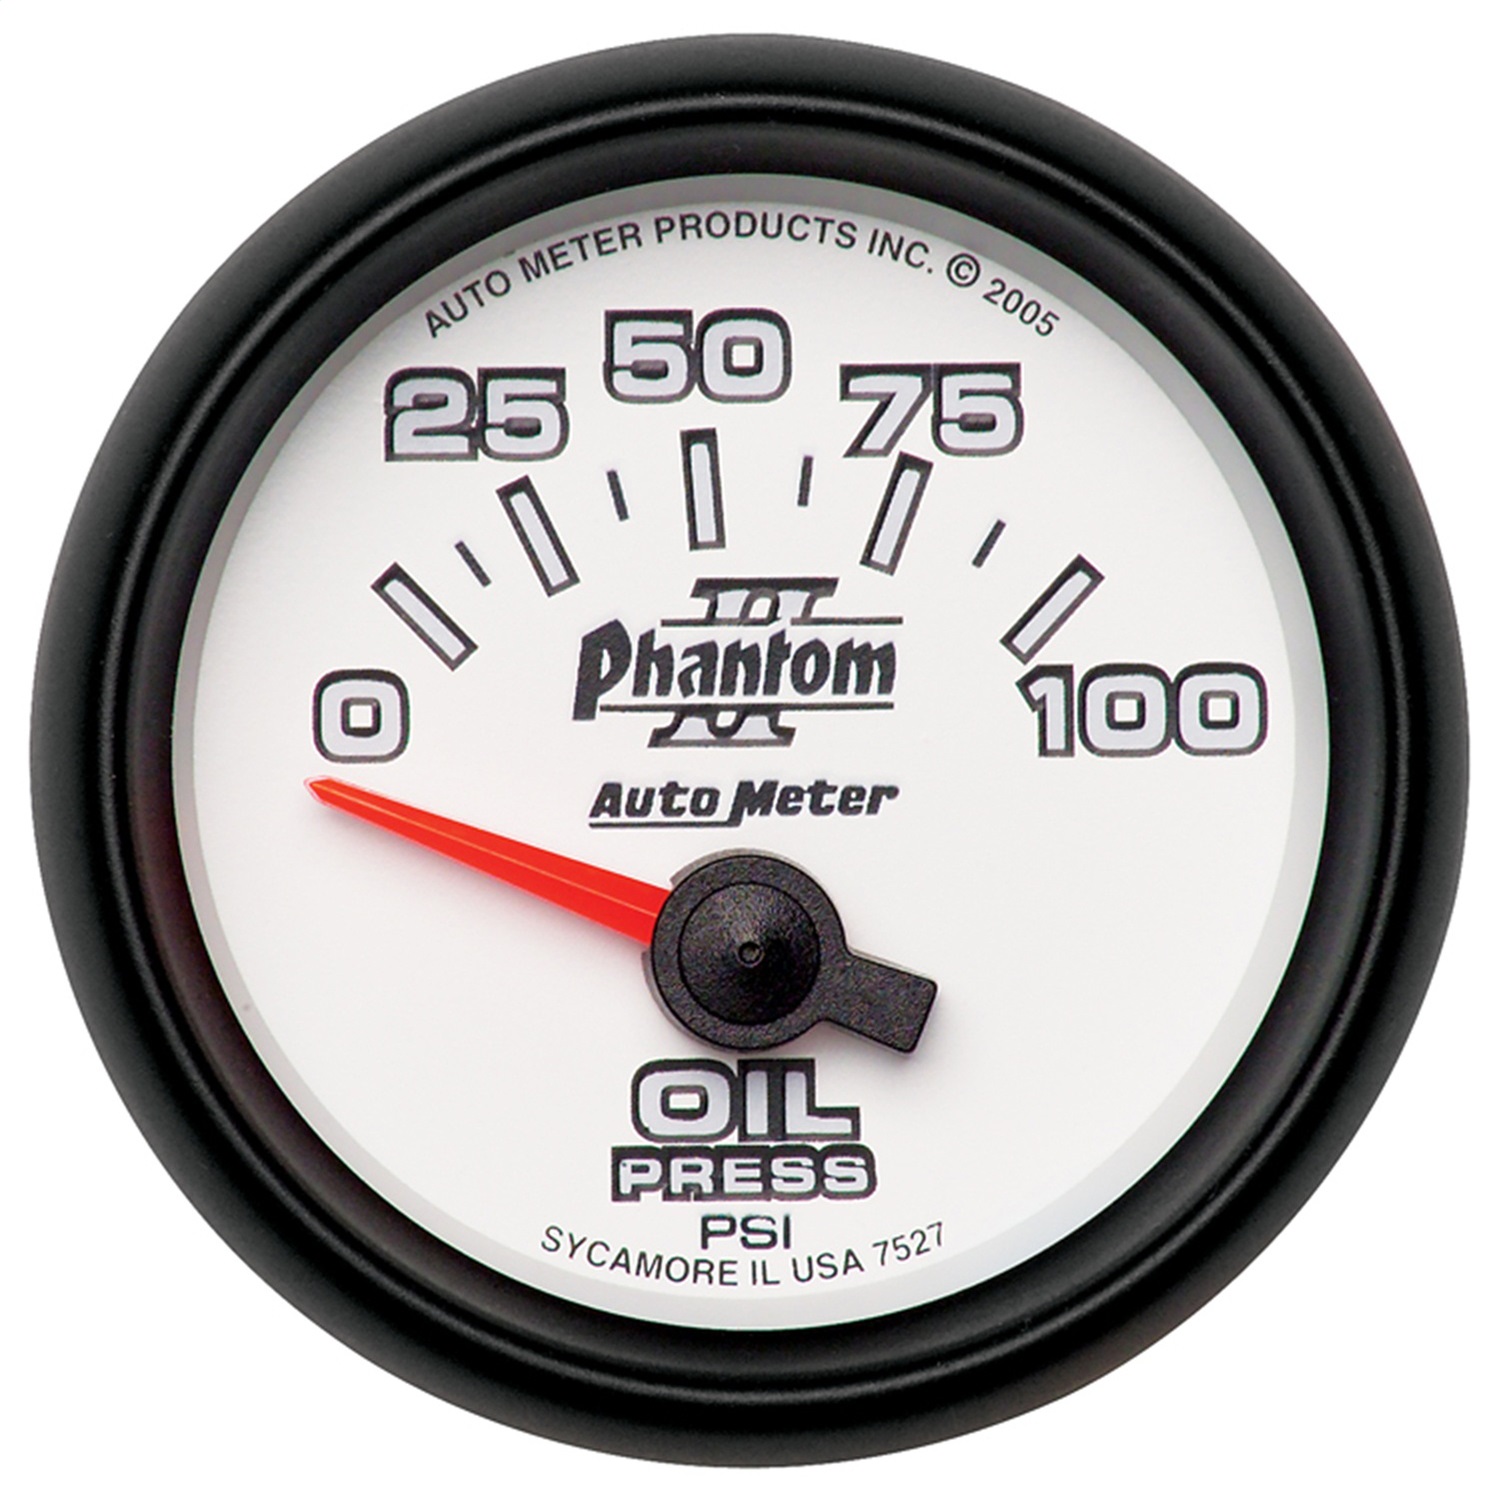 Auto Meter Auto Meter 7527 Phantom II; Electric Oil Pressure Gauge